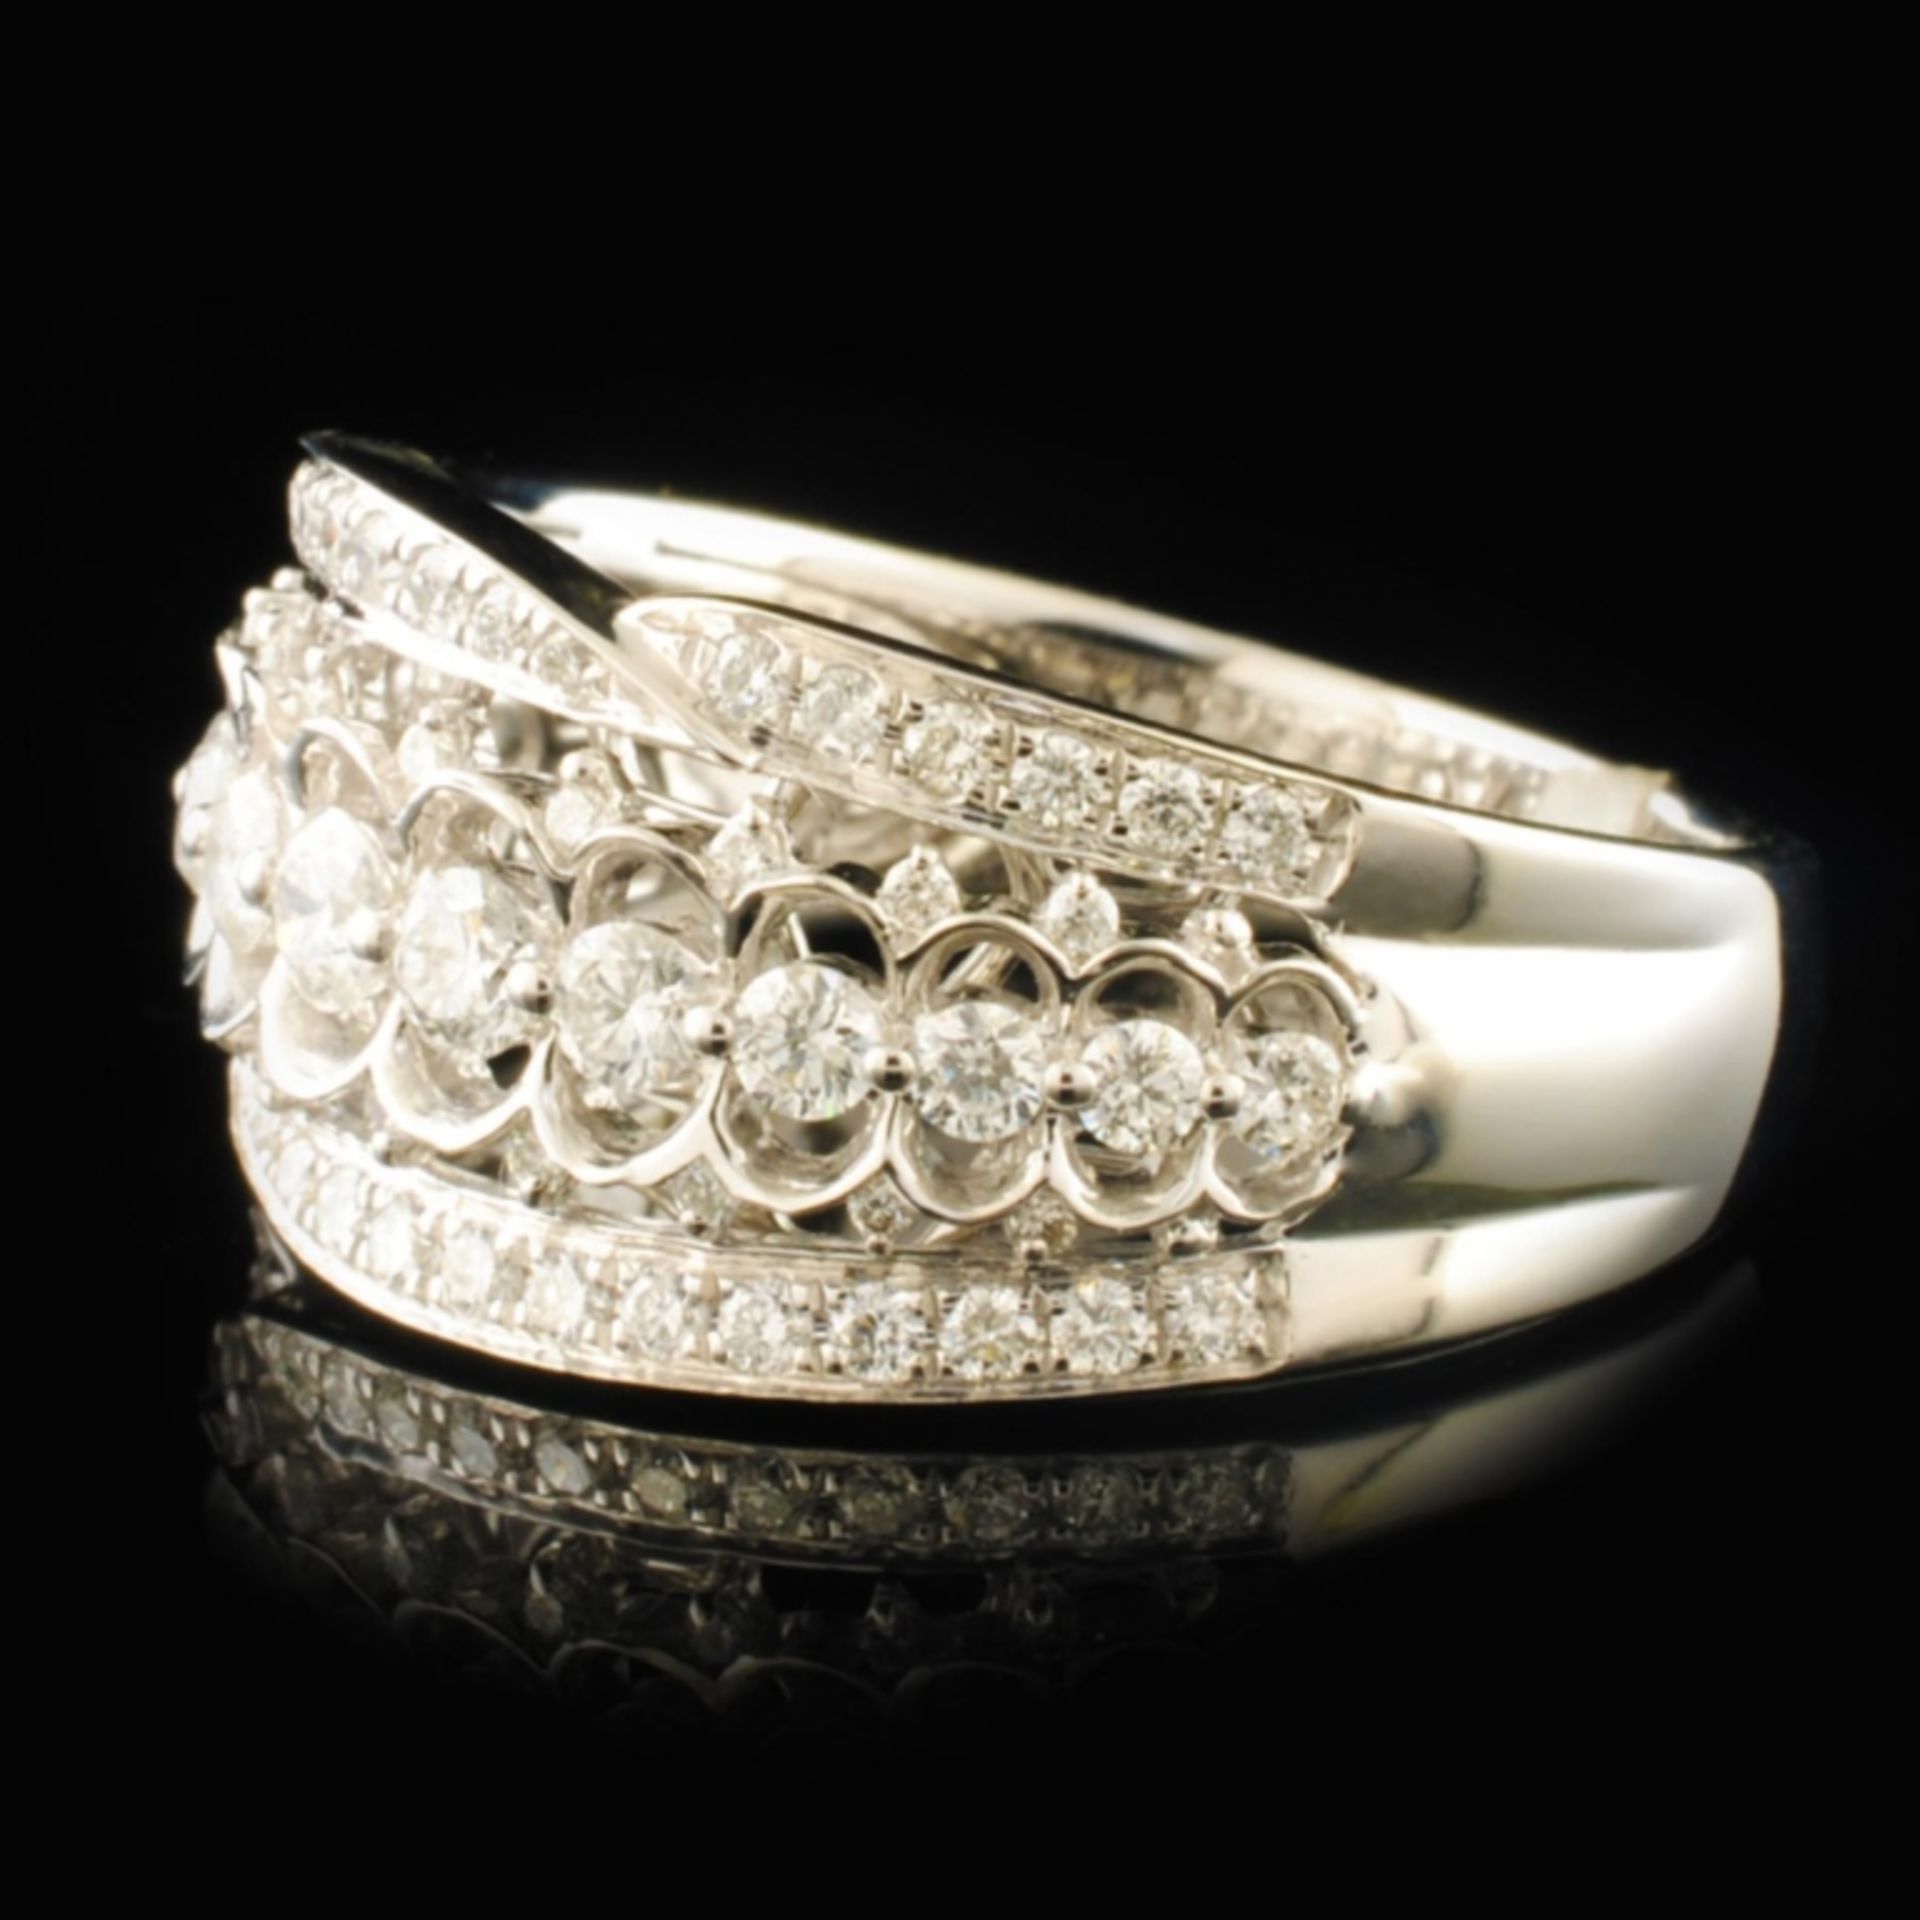 18K White Gold 0.75ctw Diamond Ring - Image 2 of 4